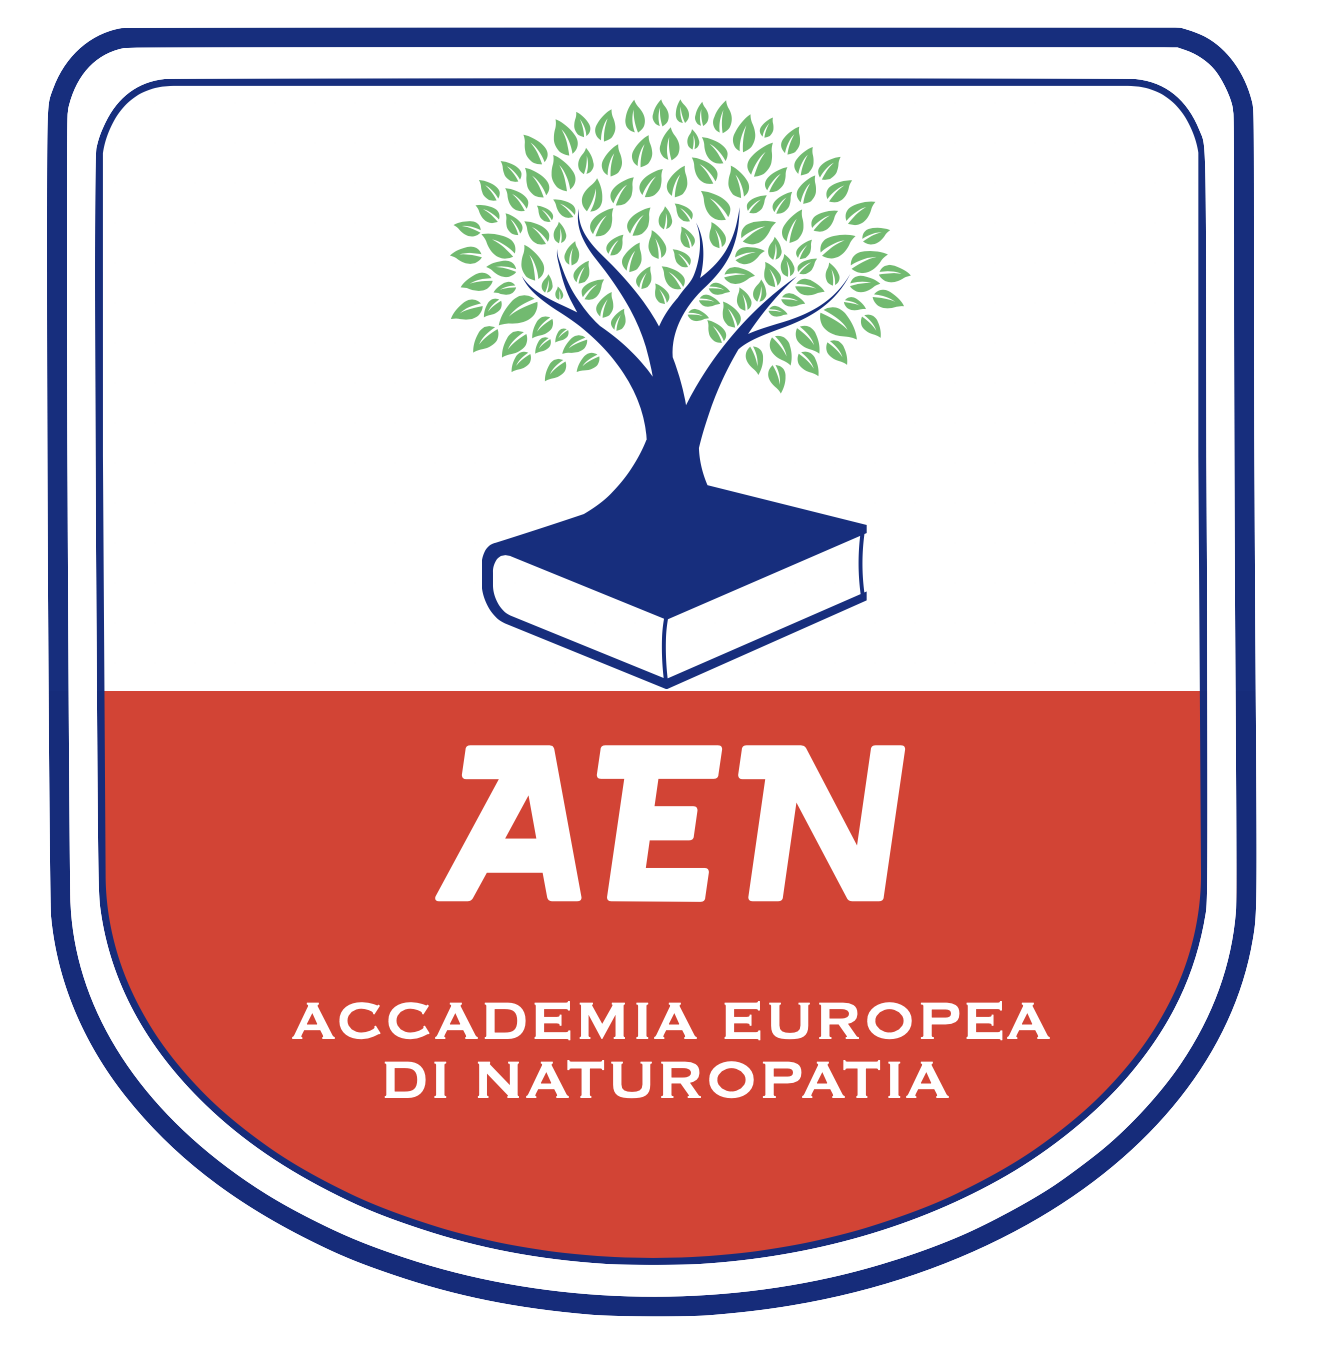 Accademia di naturopatia AEN